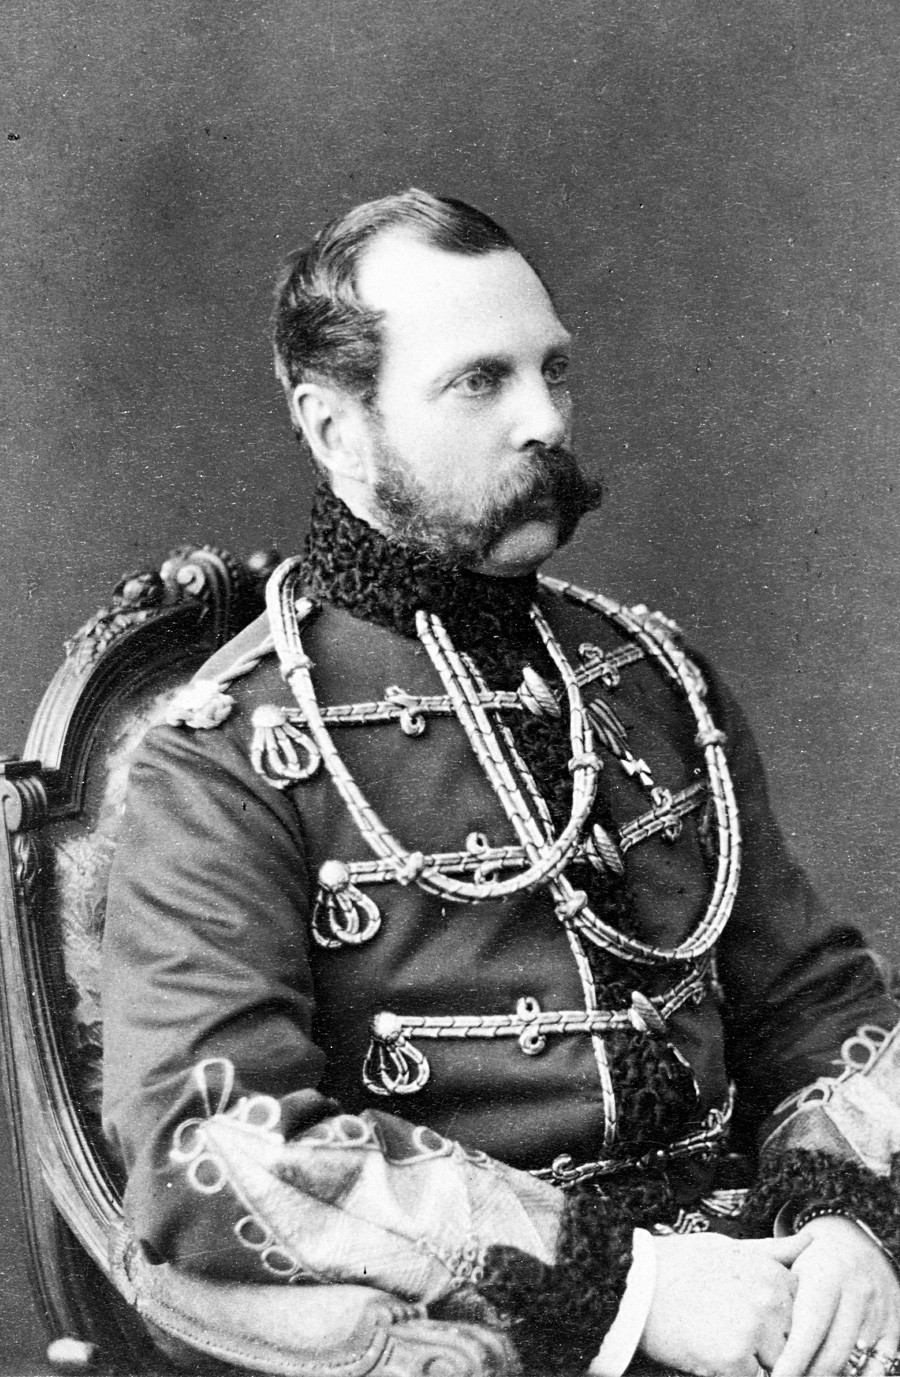 O tsar Alexandre 2°, imperador da Rússia entre 1870 e 1886.